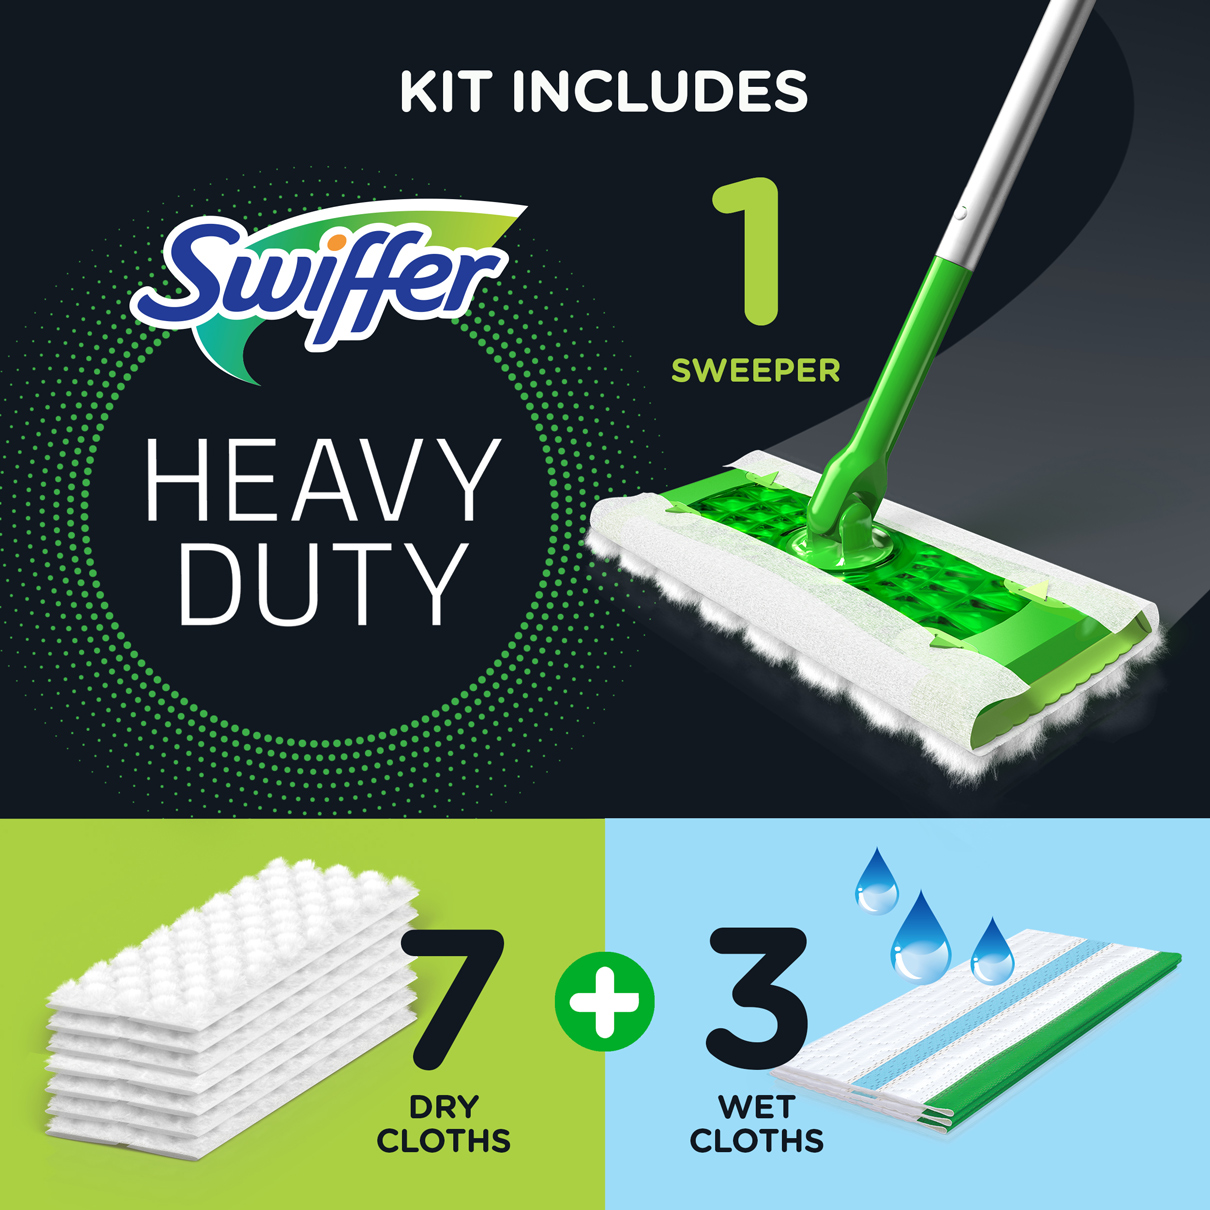 Swiffer® WetJet™ Mop Starter Kit